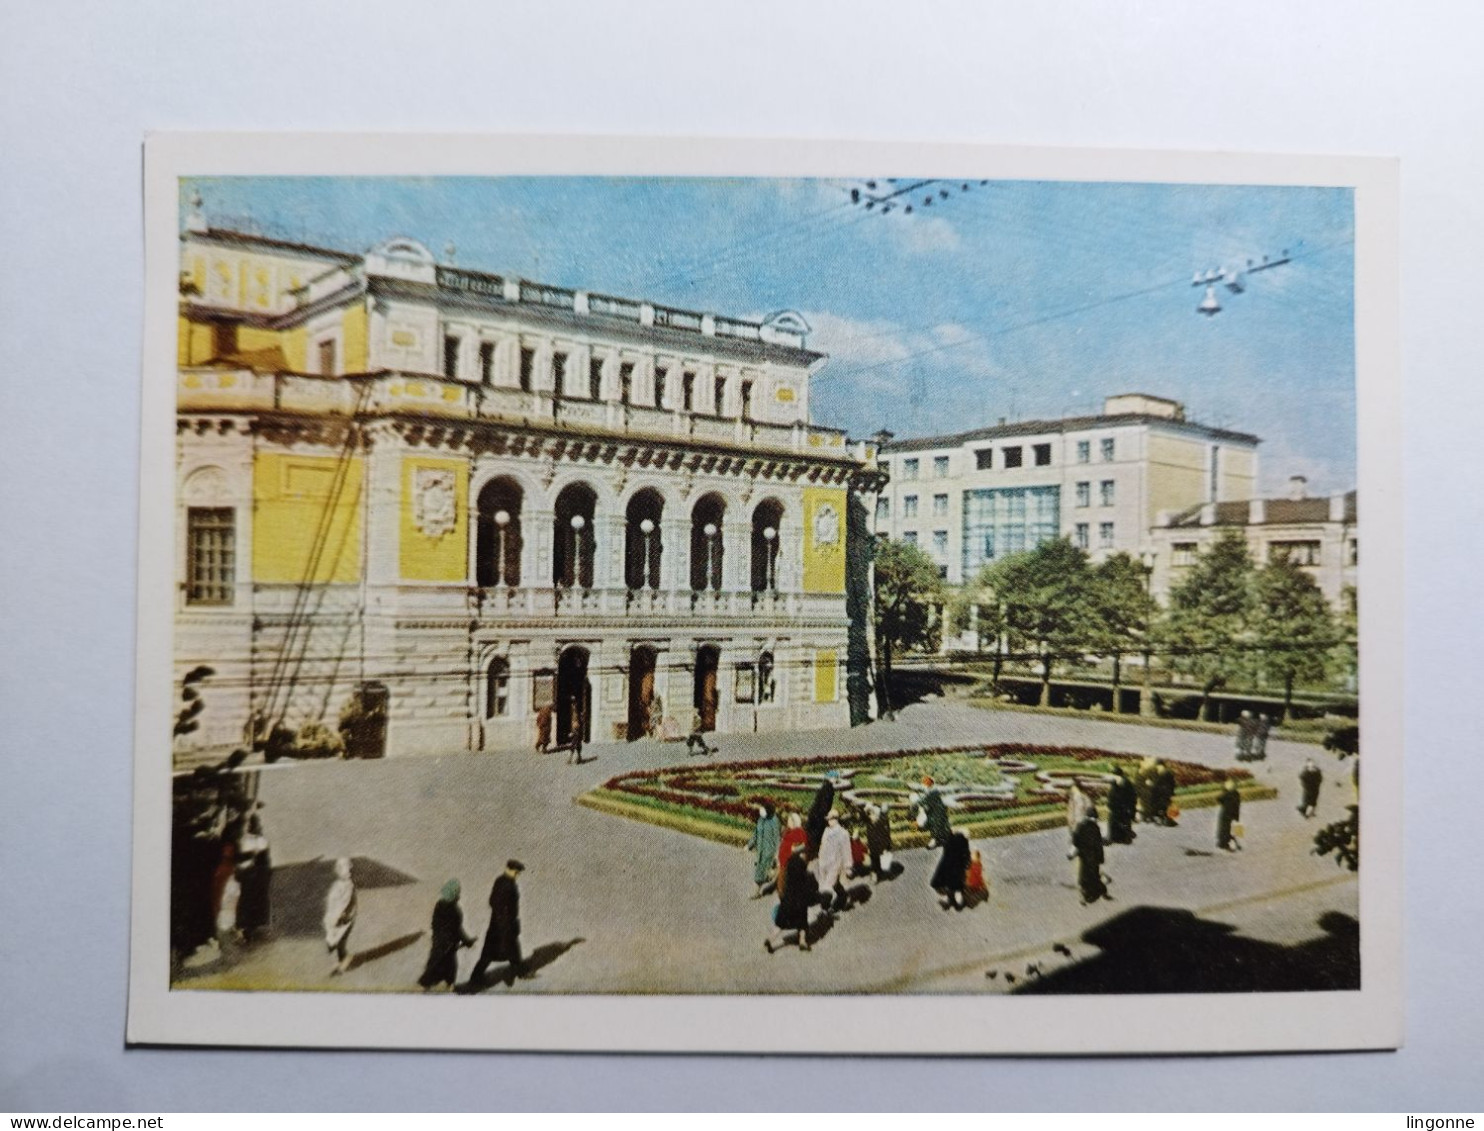 Carnet de 6 cartes postales de GORKI Nijni Novgorod BMNPE KYKOA (voir photos)